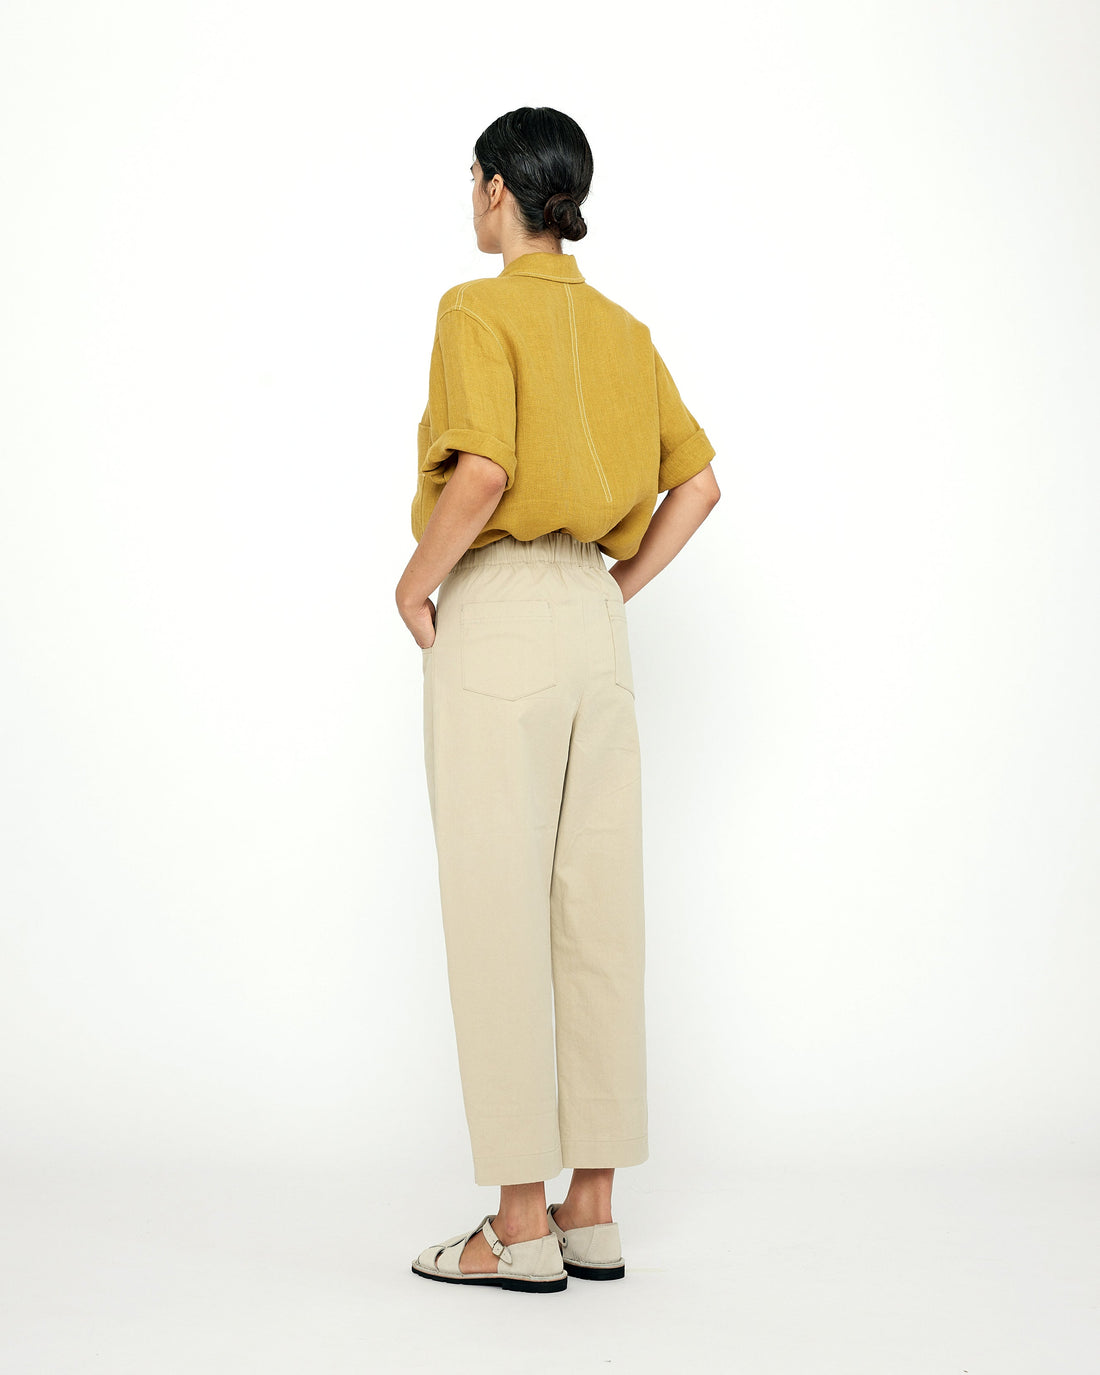 Signature Curve Legged Trouser - Cotton Edition - Sand Gray